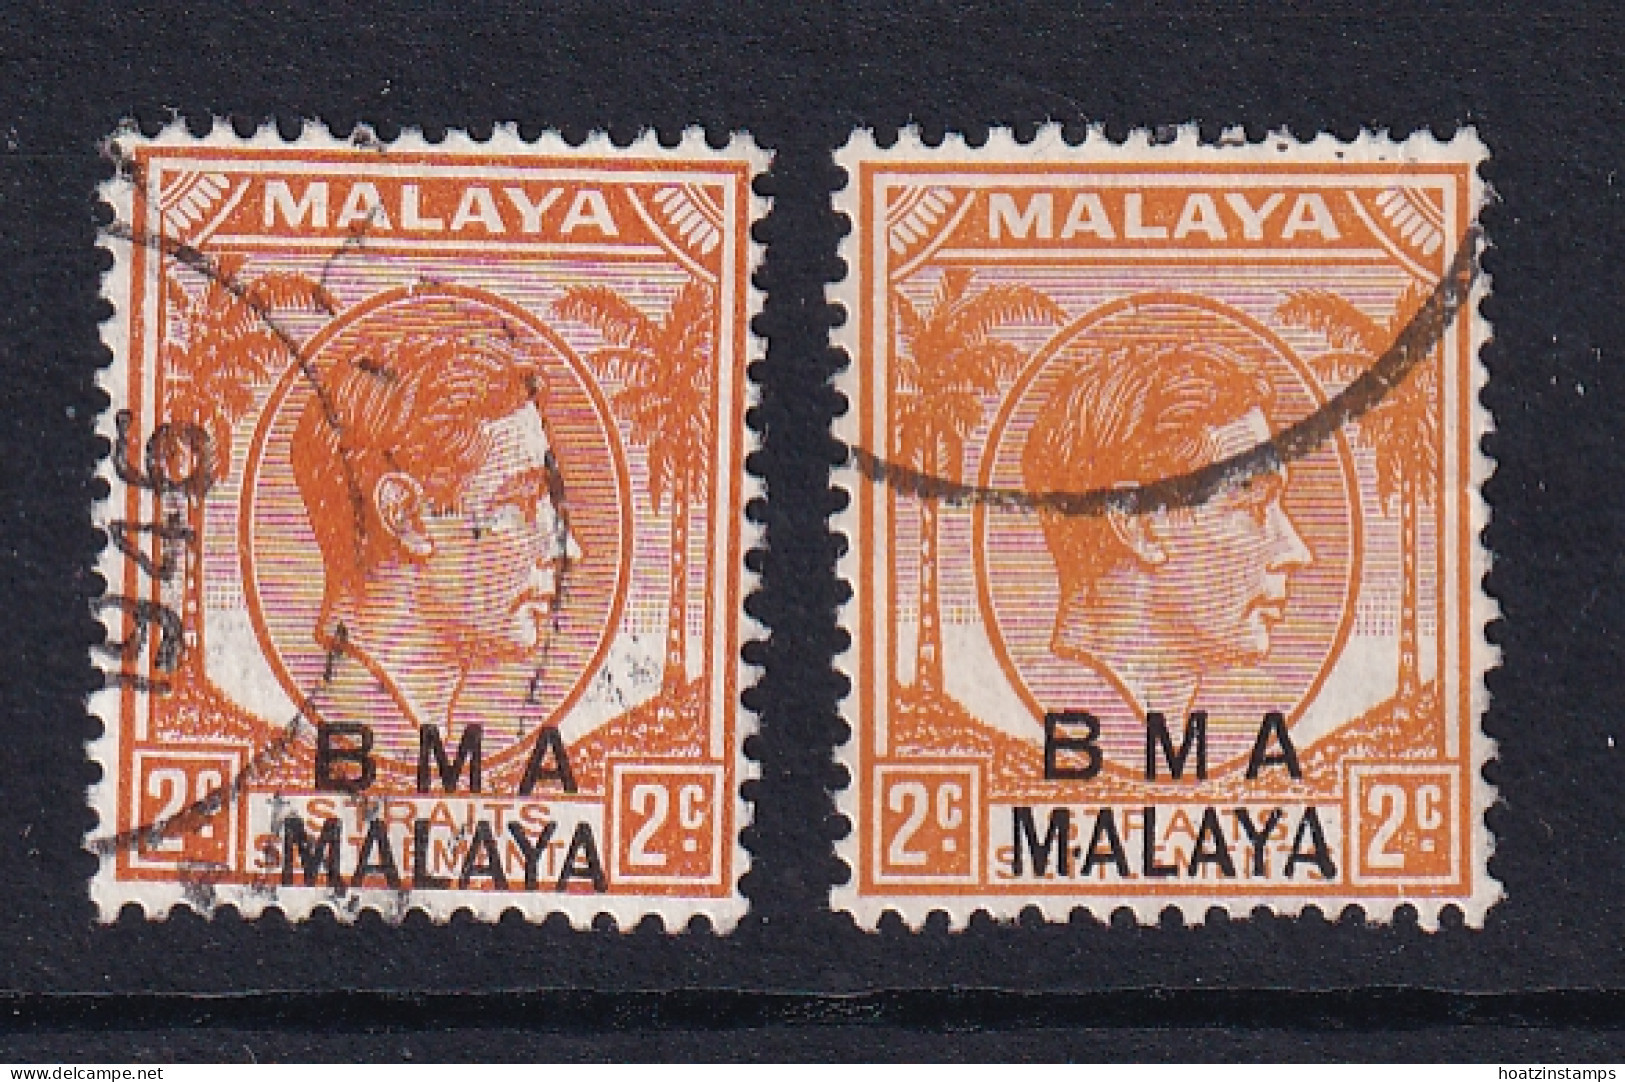 B.M.A. (Malaya): 1945/48   KGVI 'B.M.A.' OVPT   SG2 / 2a    2c  [Die II] [Ordinary And Chalk]   Used - Malaya (British Military Administration)